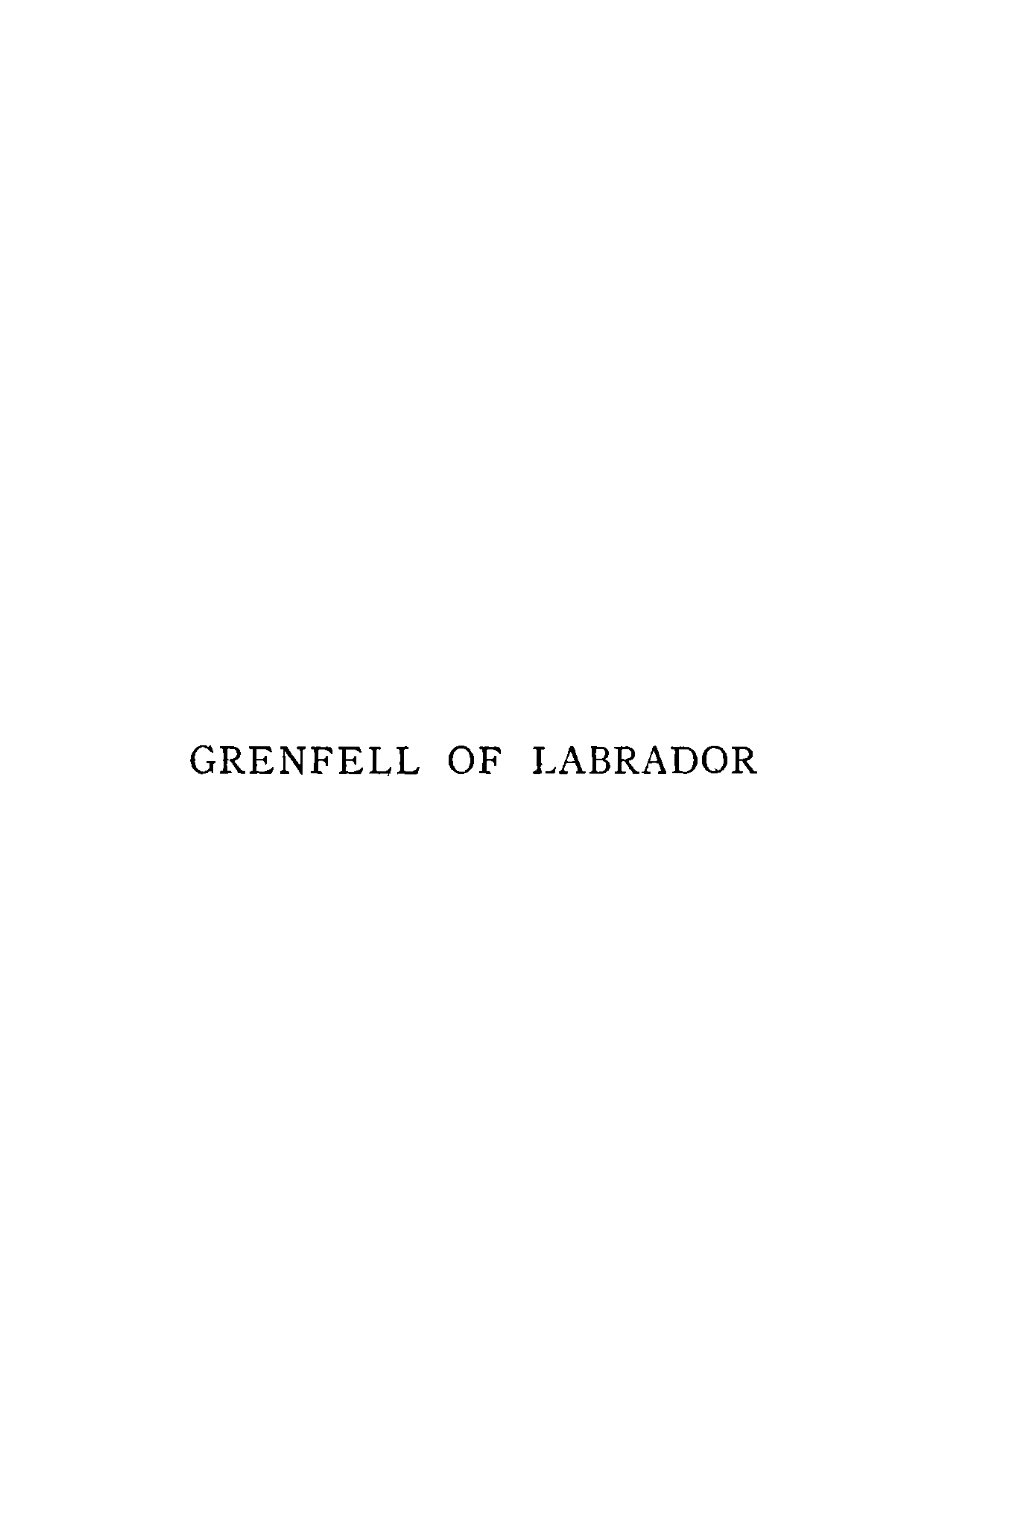 Grenfell of Labrador. London